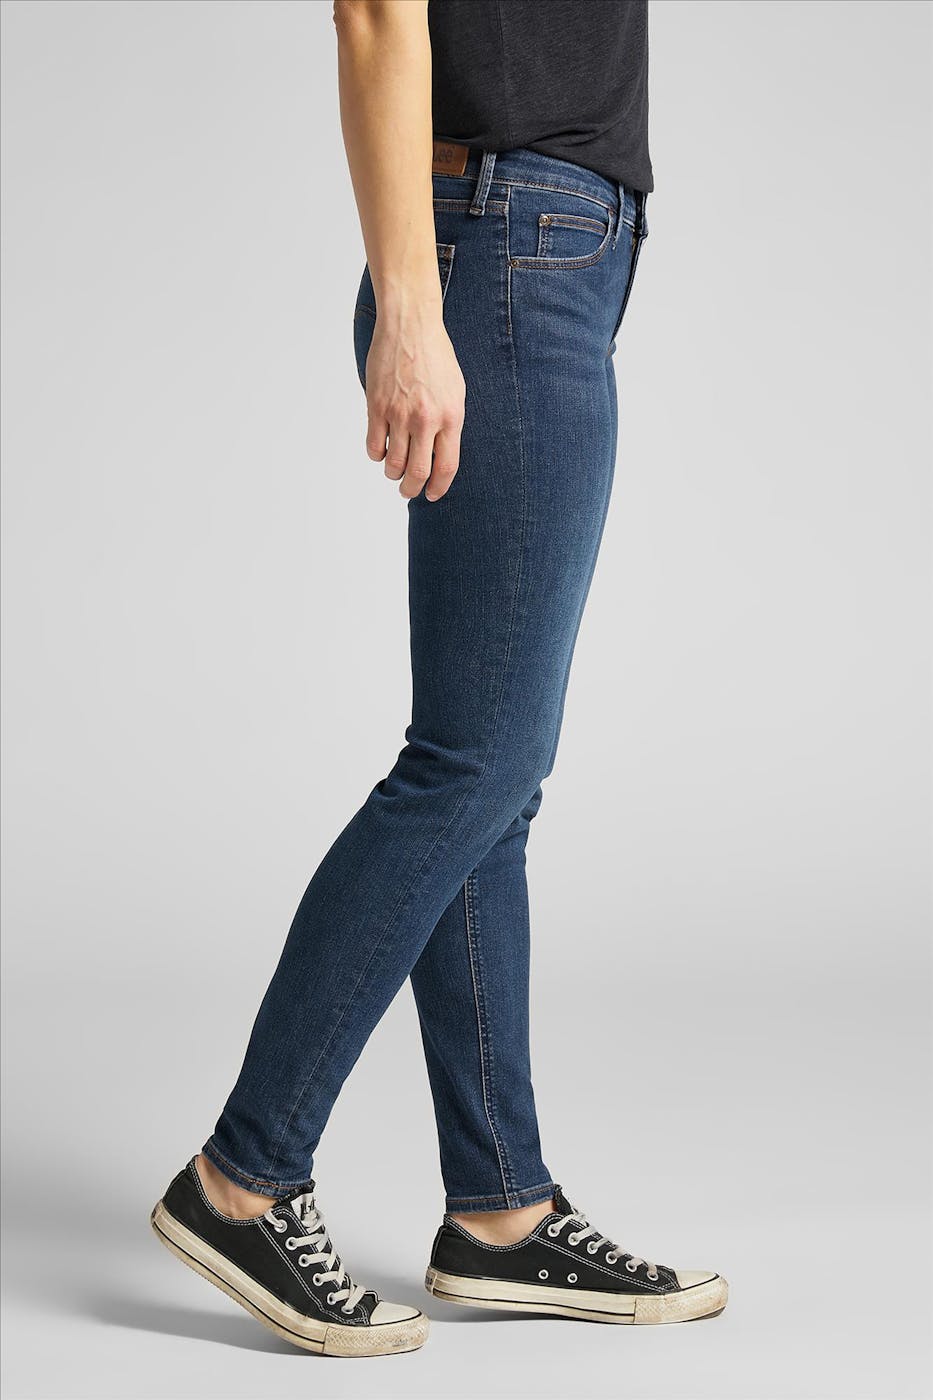 Lee - Blauwe Scarlett skinny jeans